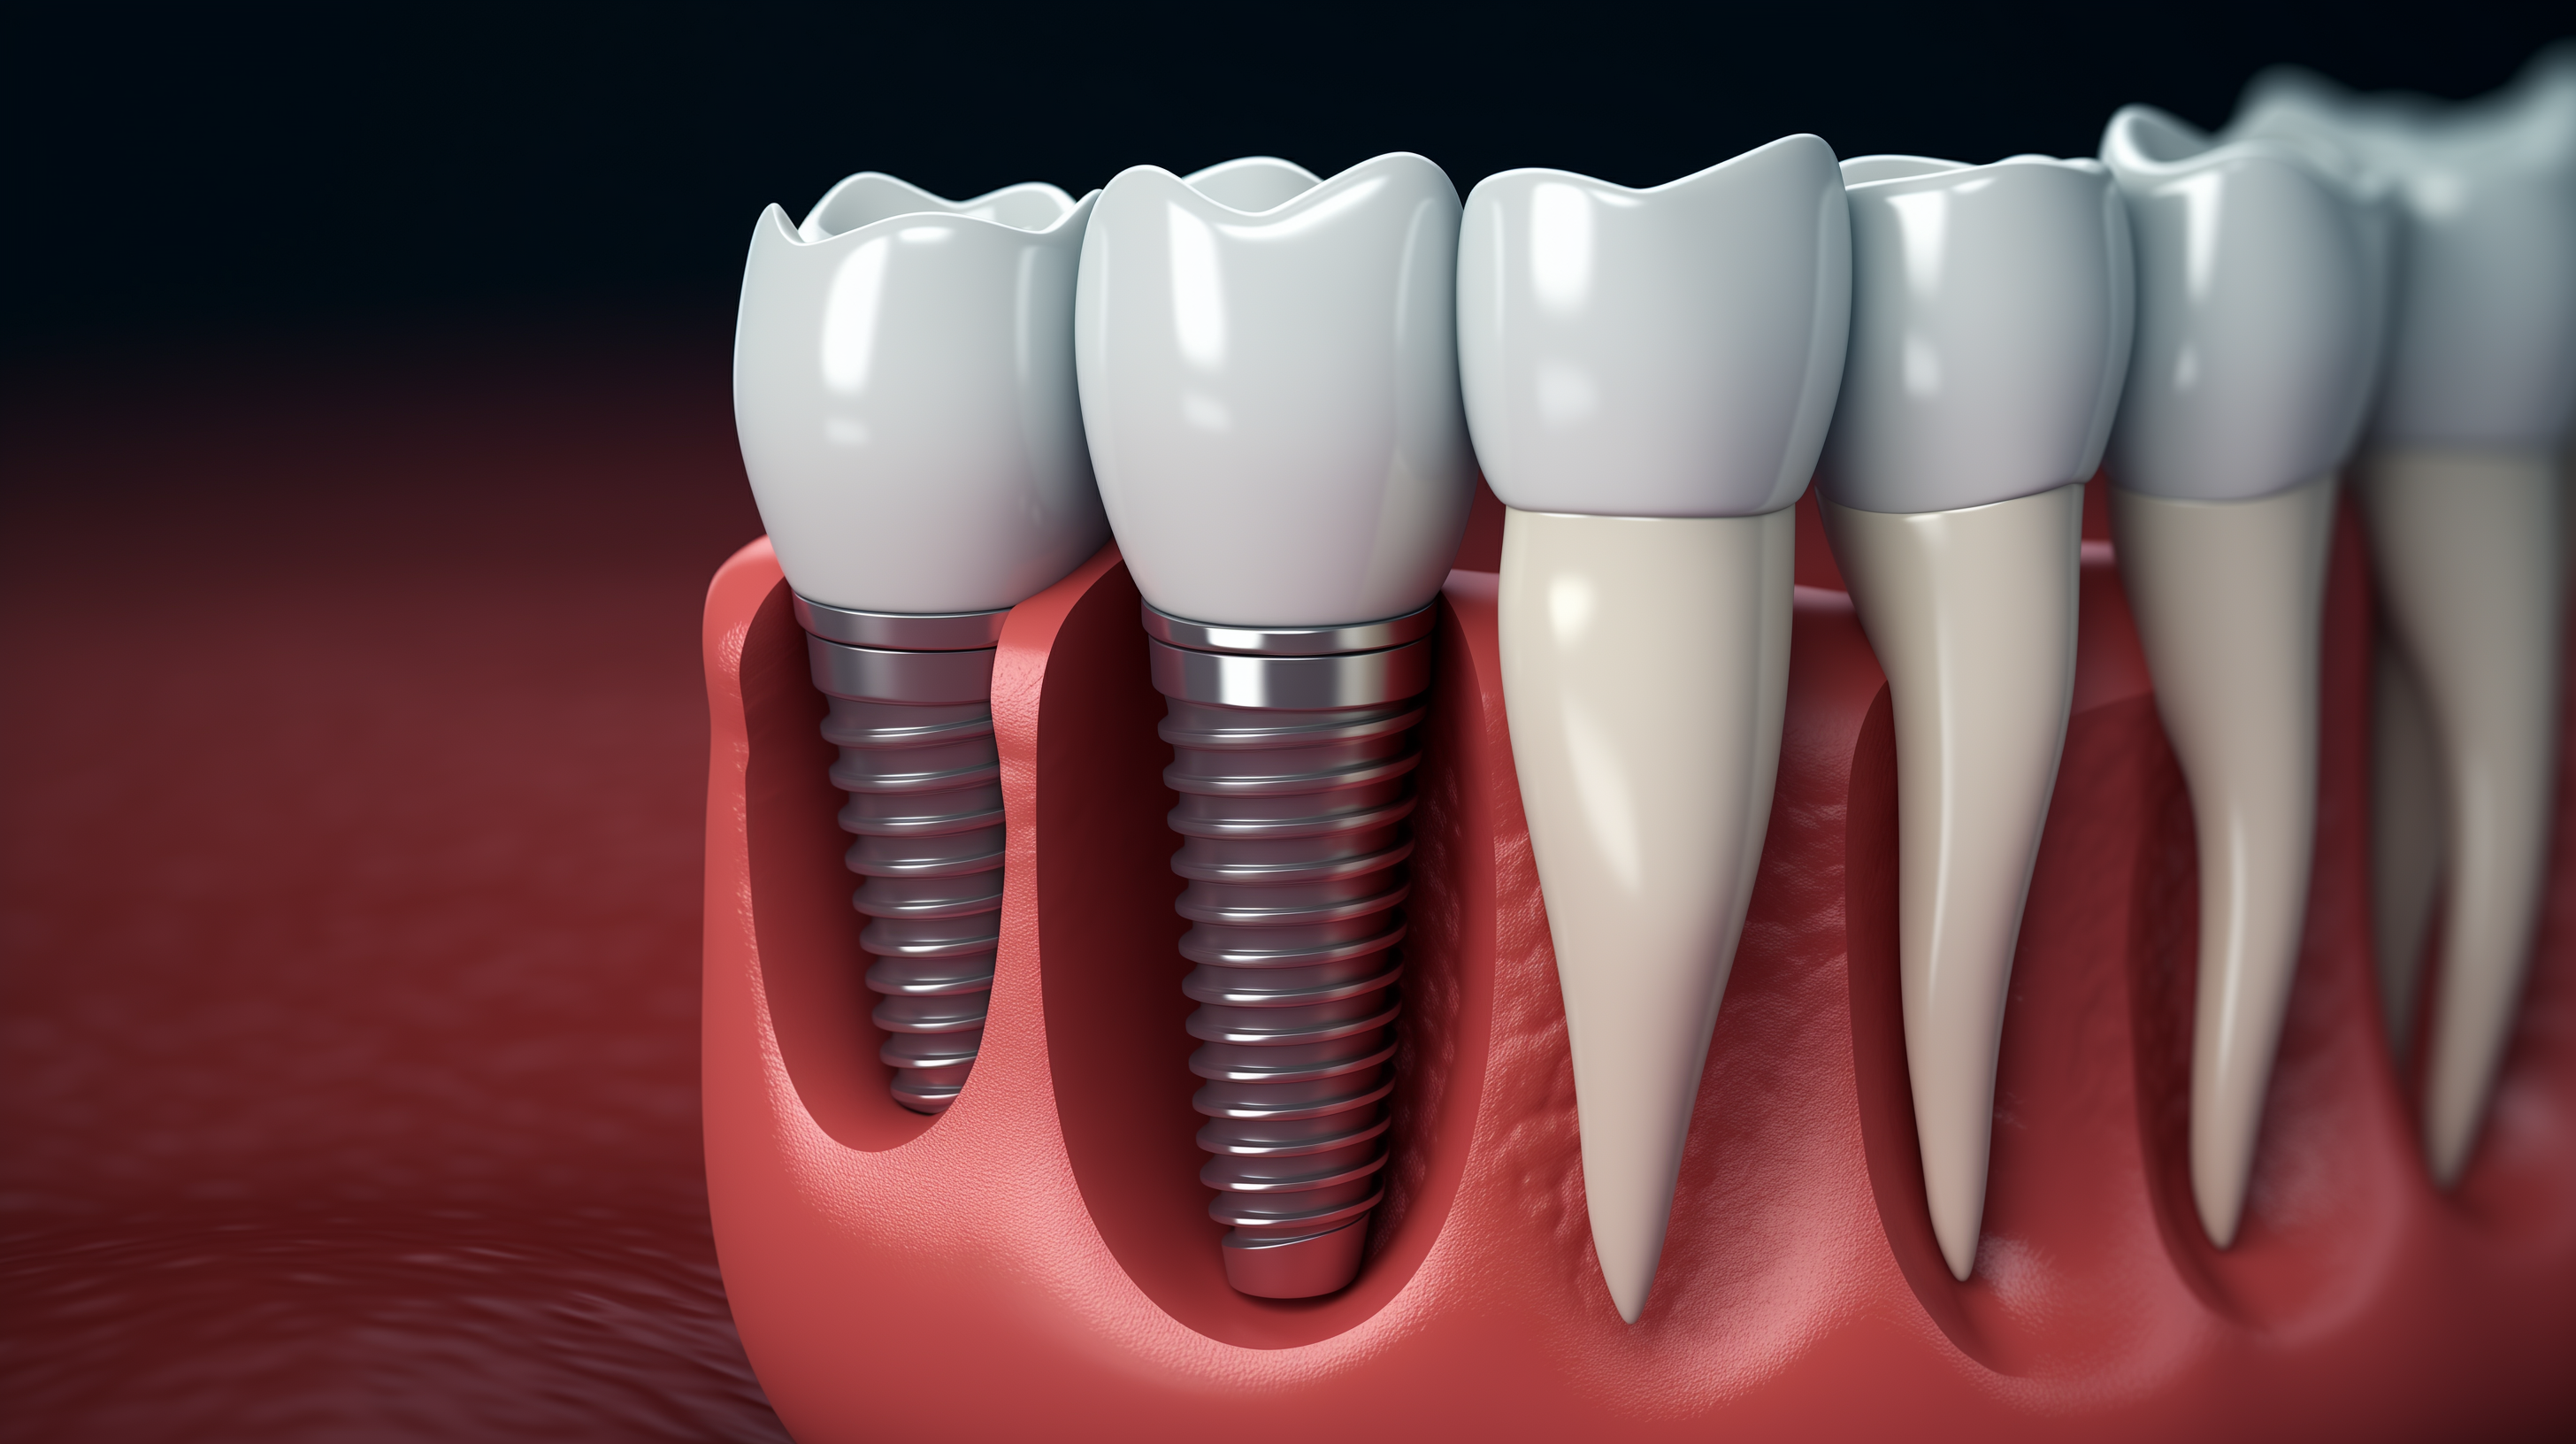 3D Model of Dental Implants.